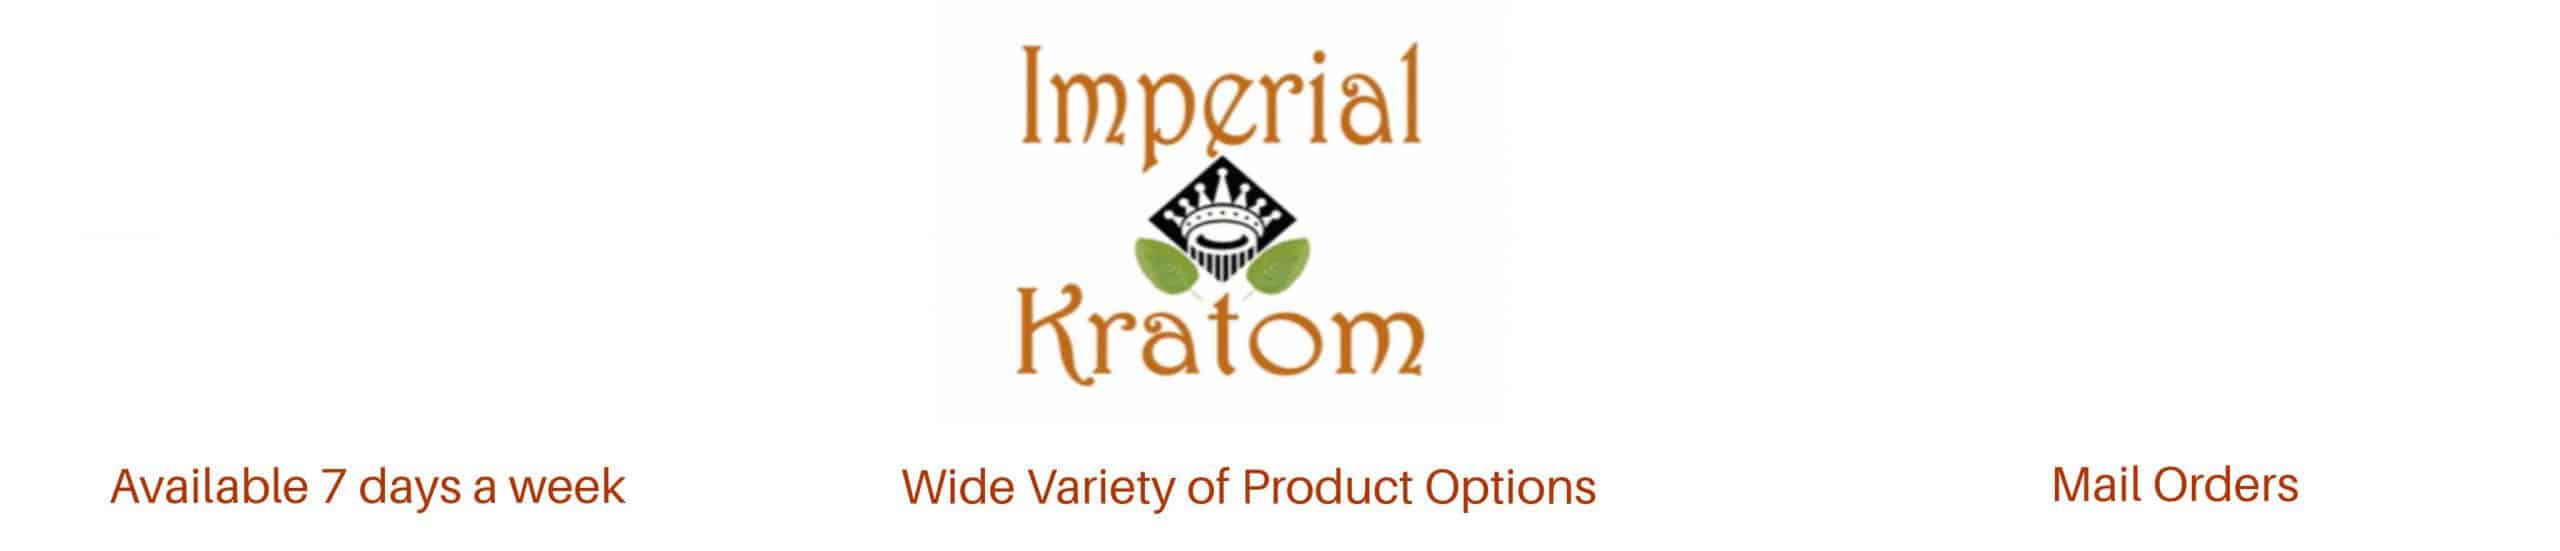 image of imperial kratom service